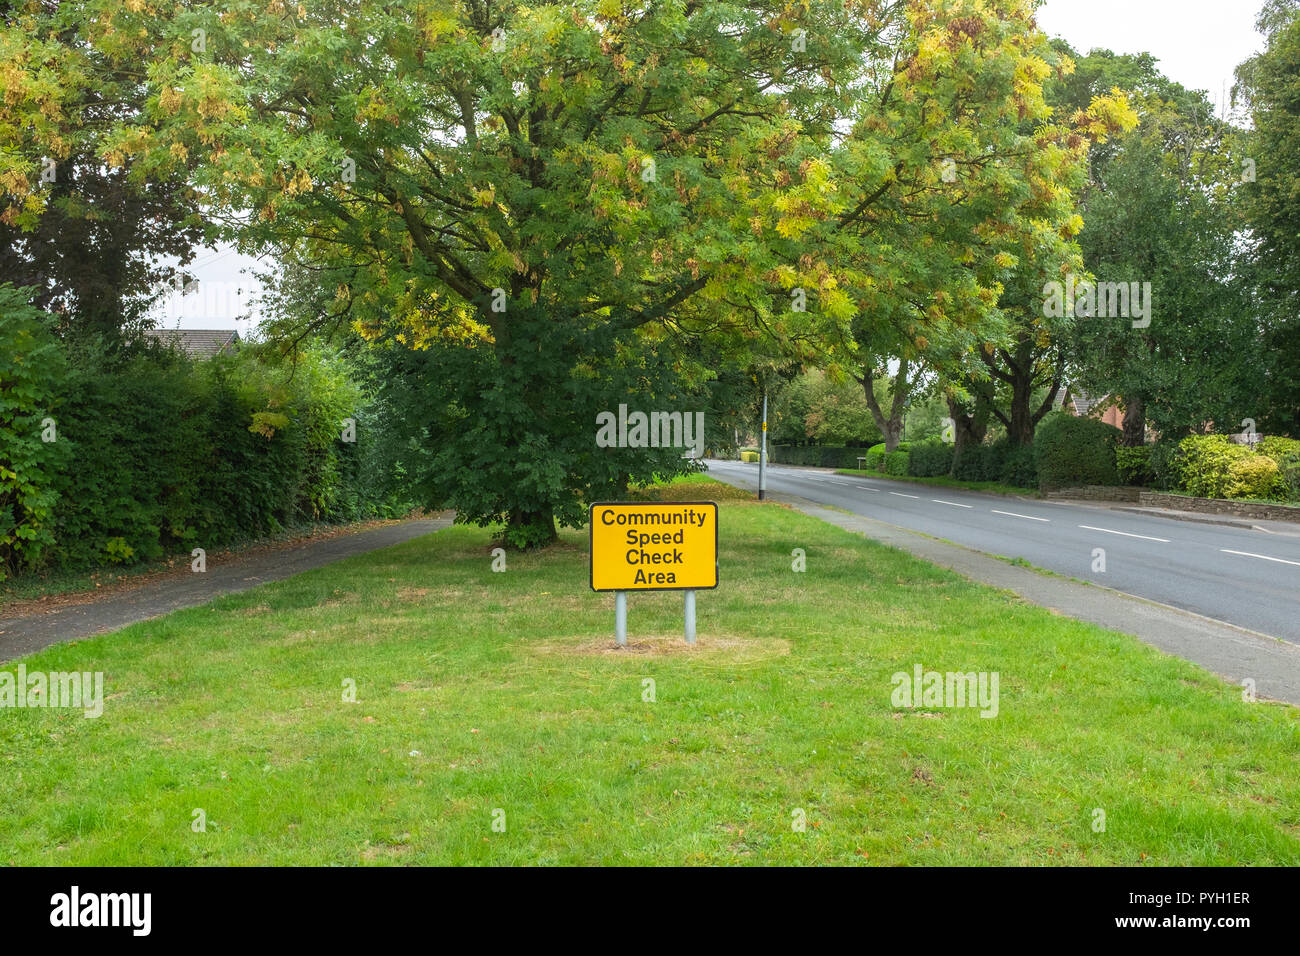 Community speed check area sign in Sandbach Cheshire UK Stock Photo